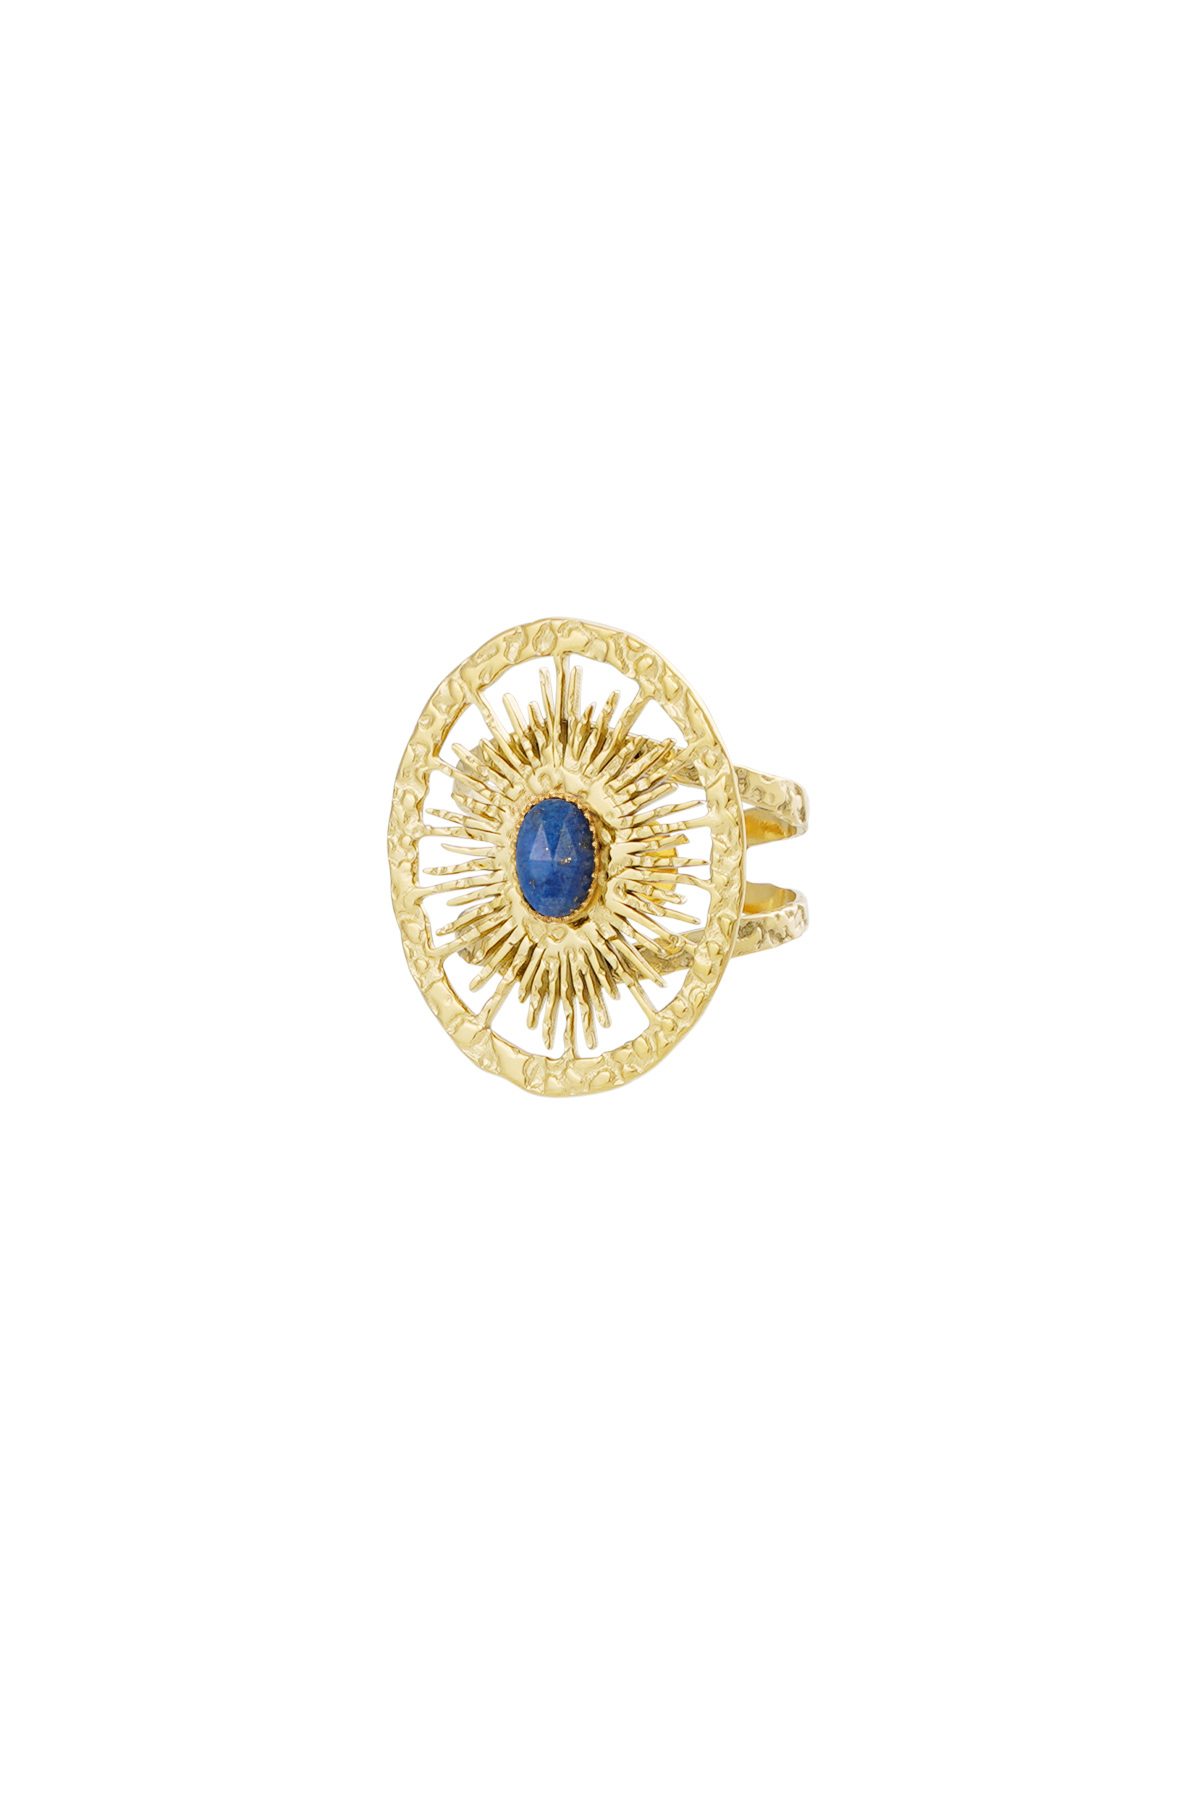 Ring ronde twister met steen - goud/blauw